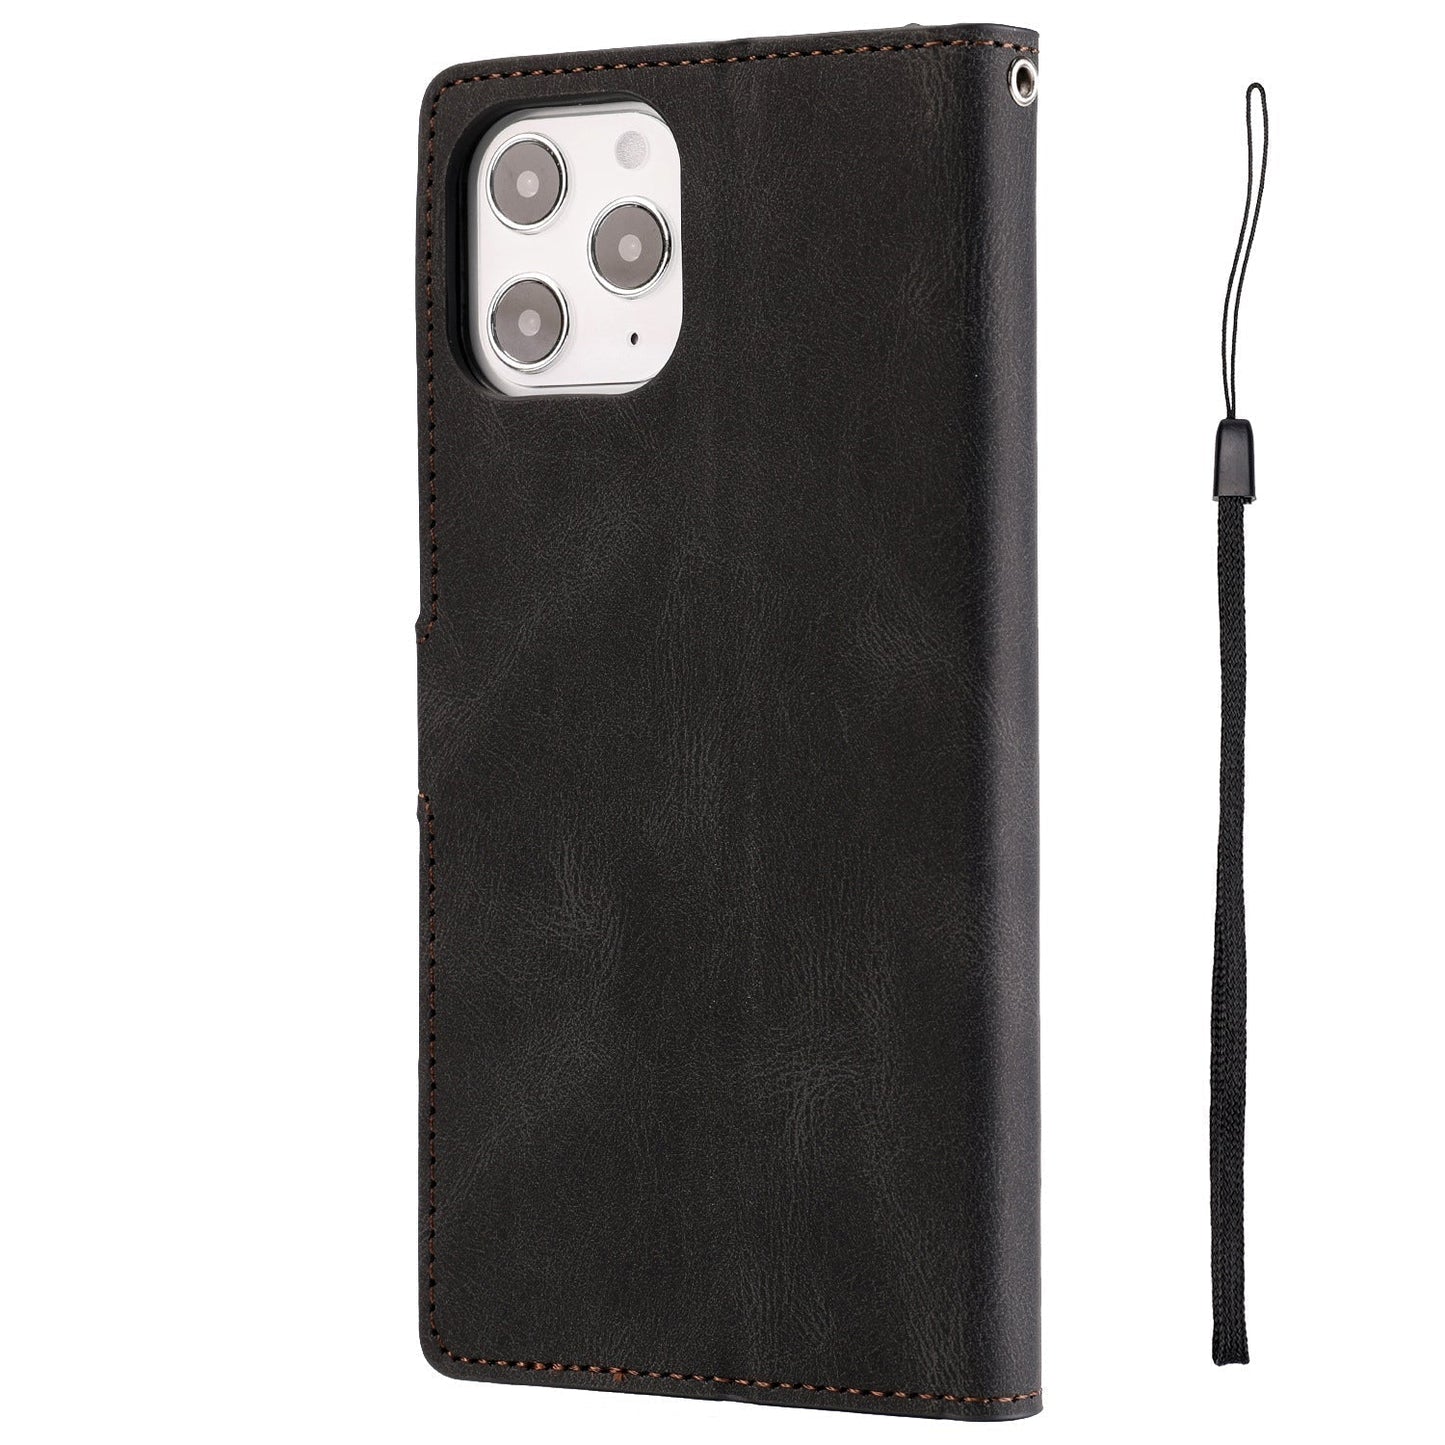 Hidden Message Of Dachshund - Playful Wallet Phone Case V2